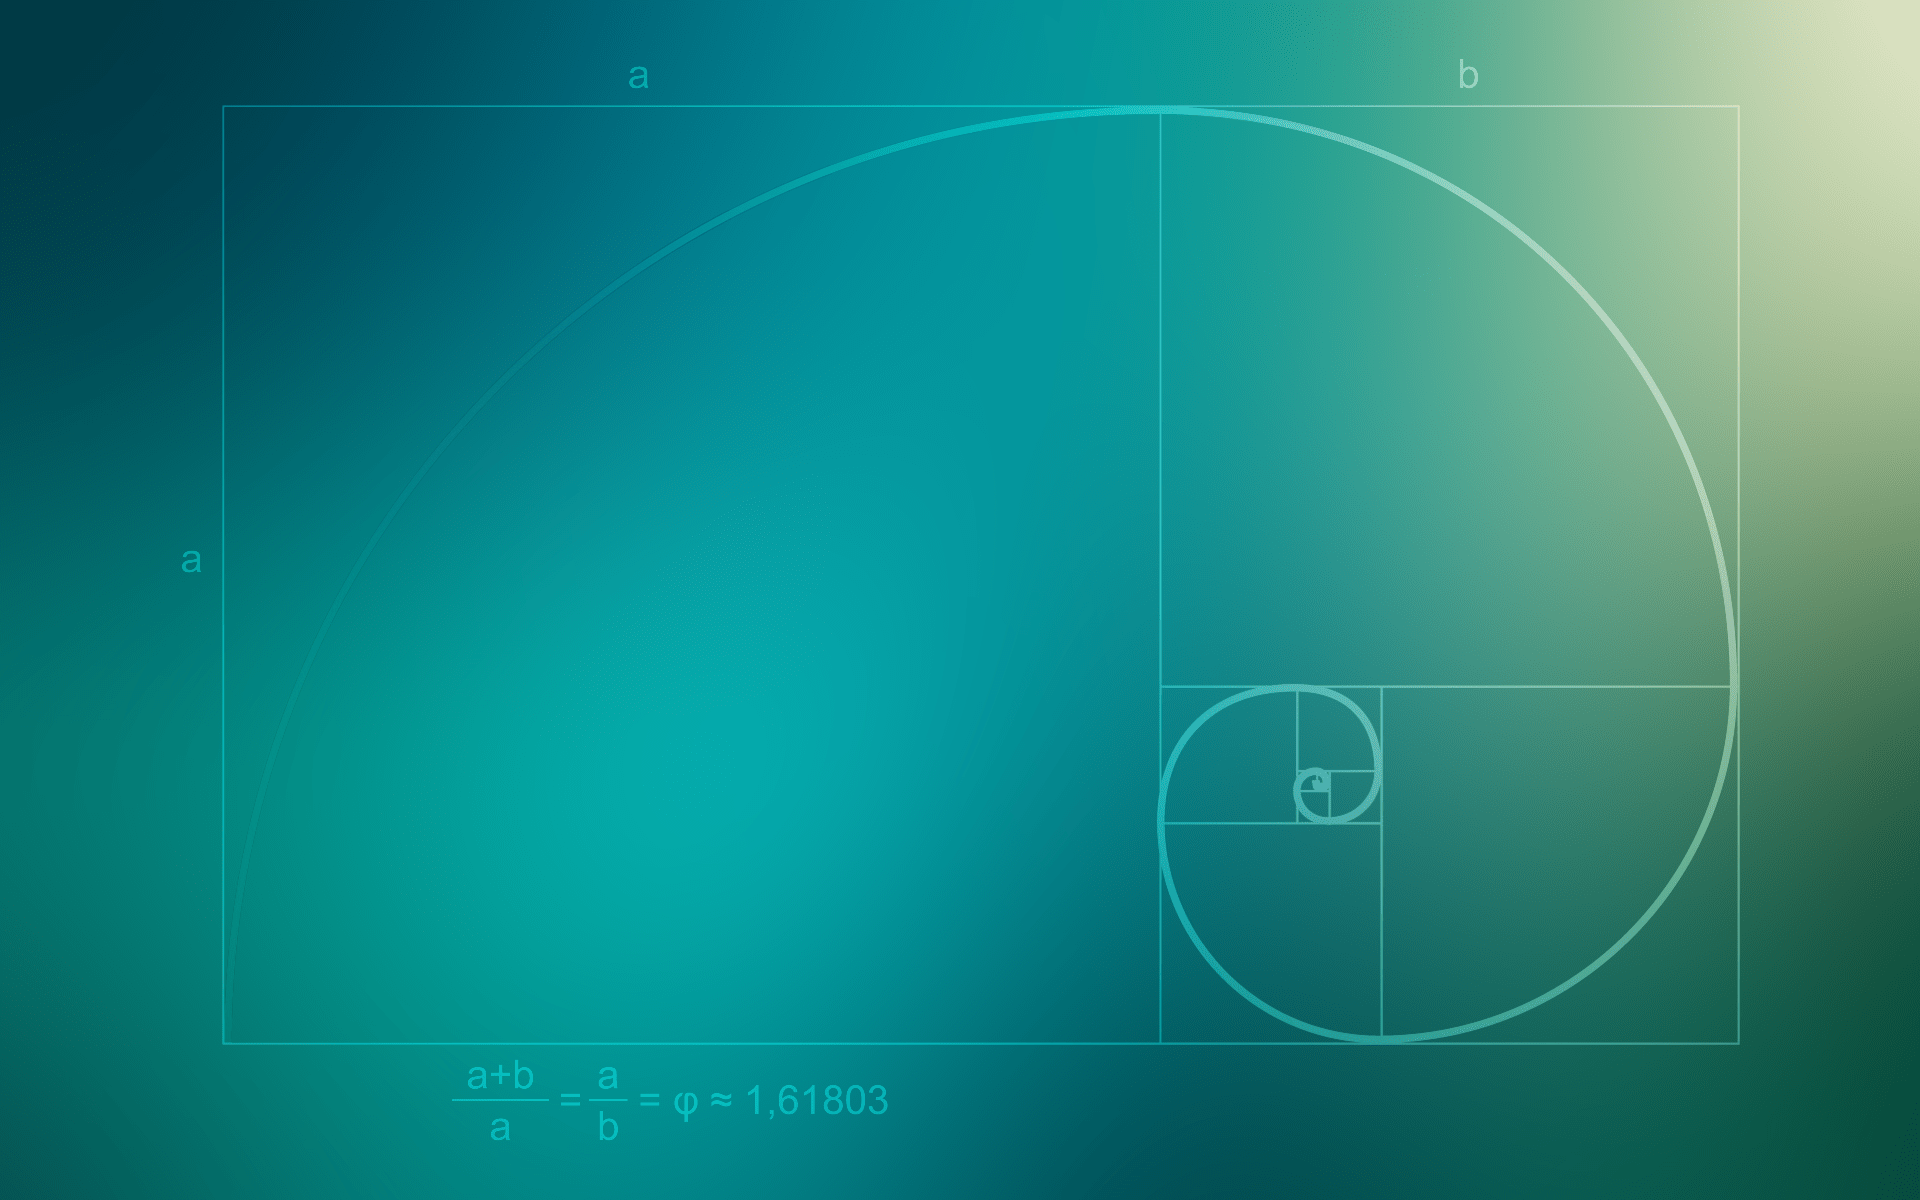 fibonacci sequence spiral wallpaper